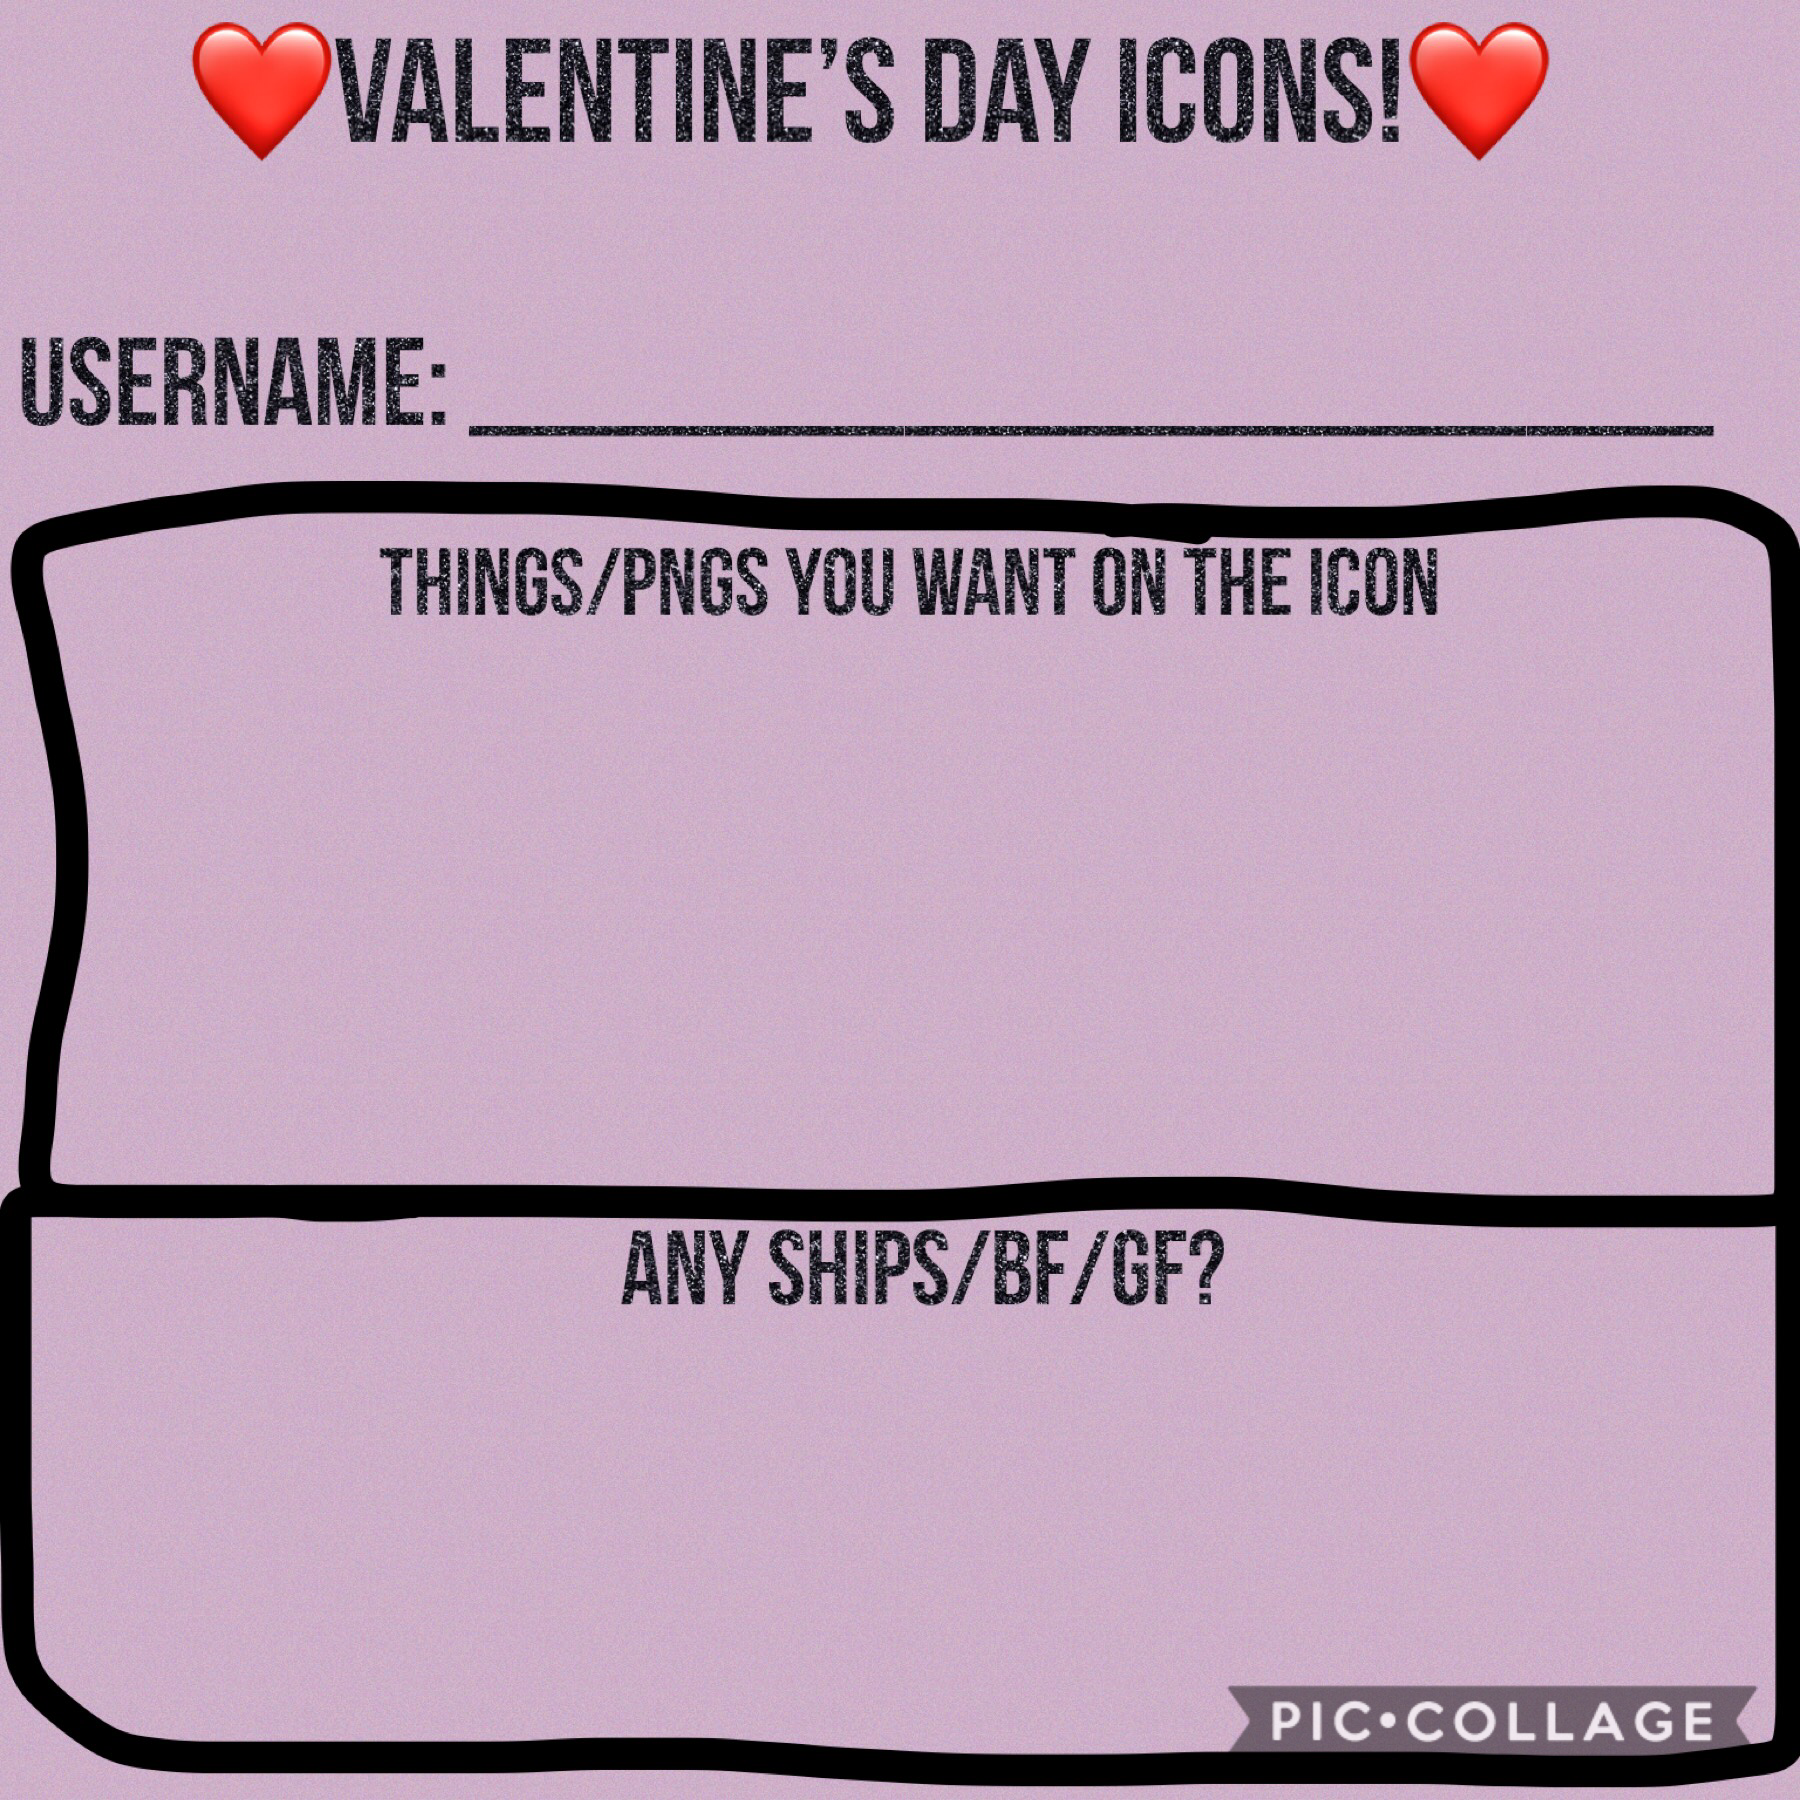 Valentine’s day icons!